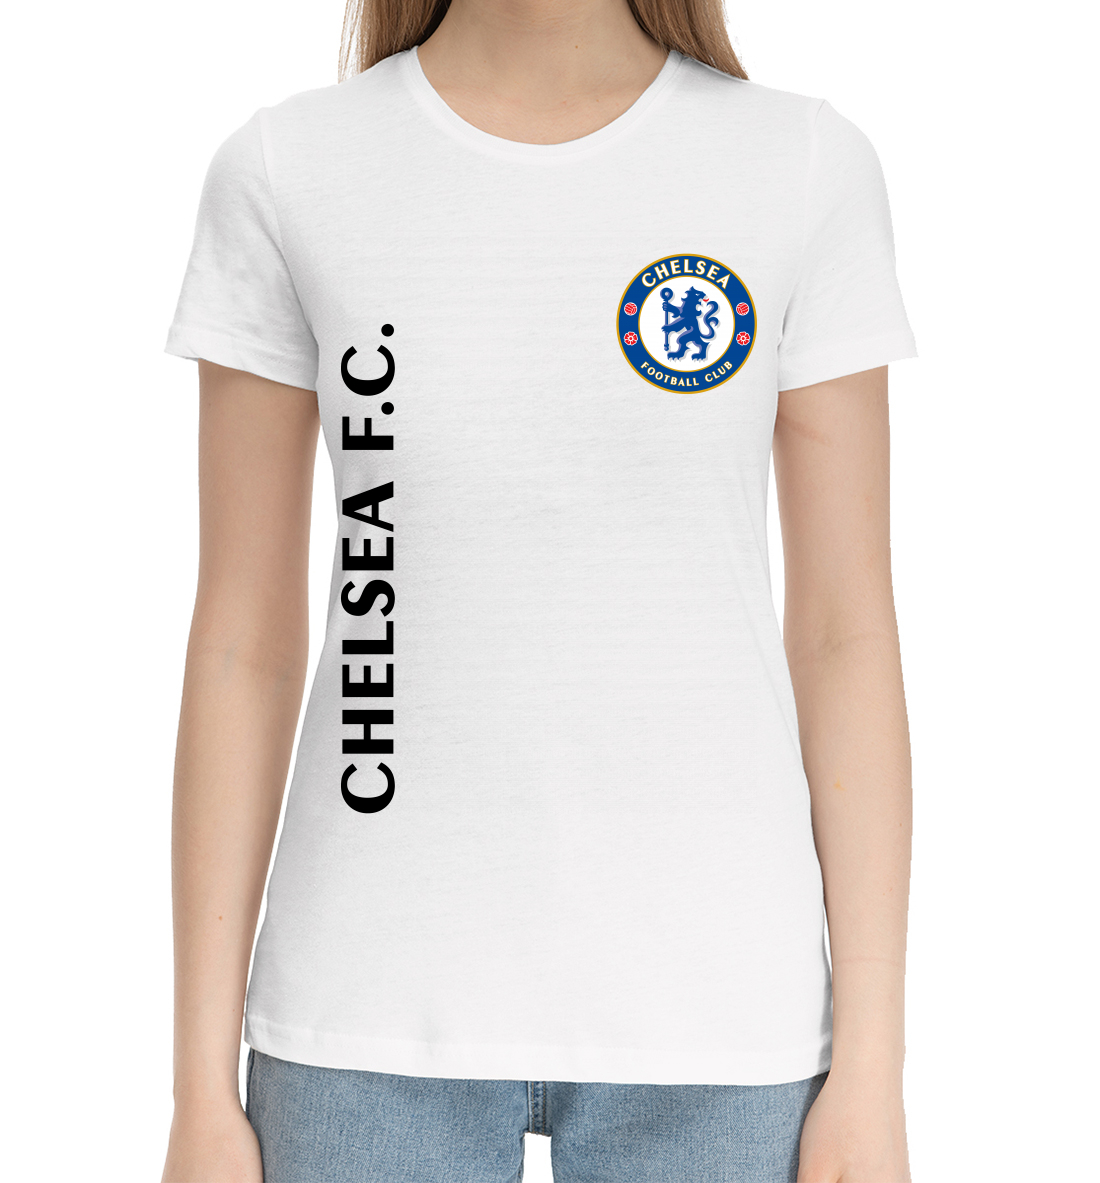 Женская Хлопковая футболка Chelsea, артикул CHL-954464-hfu-1mp